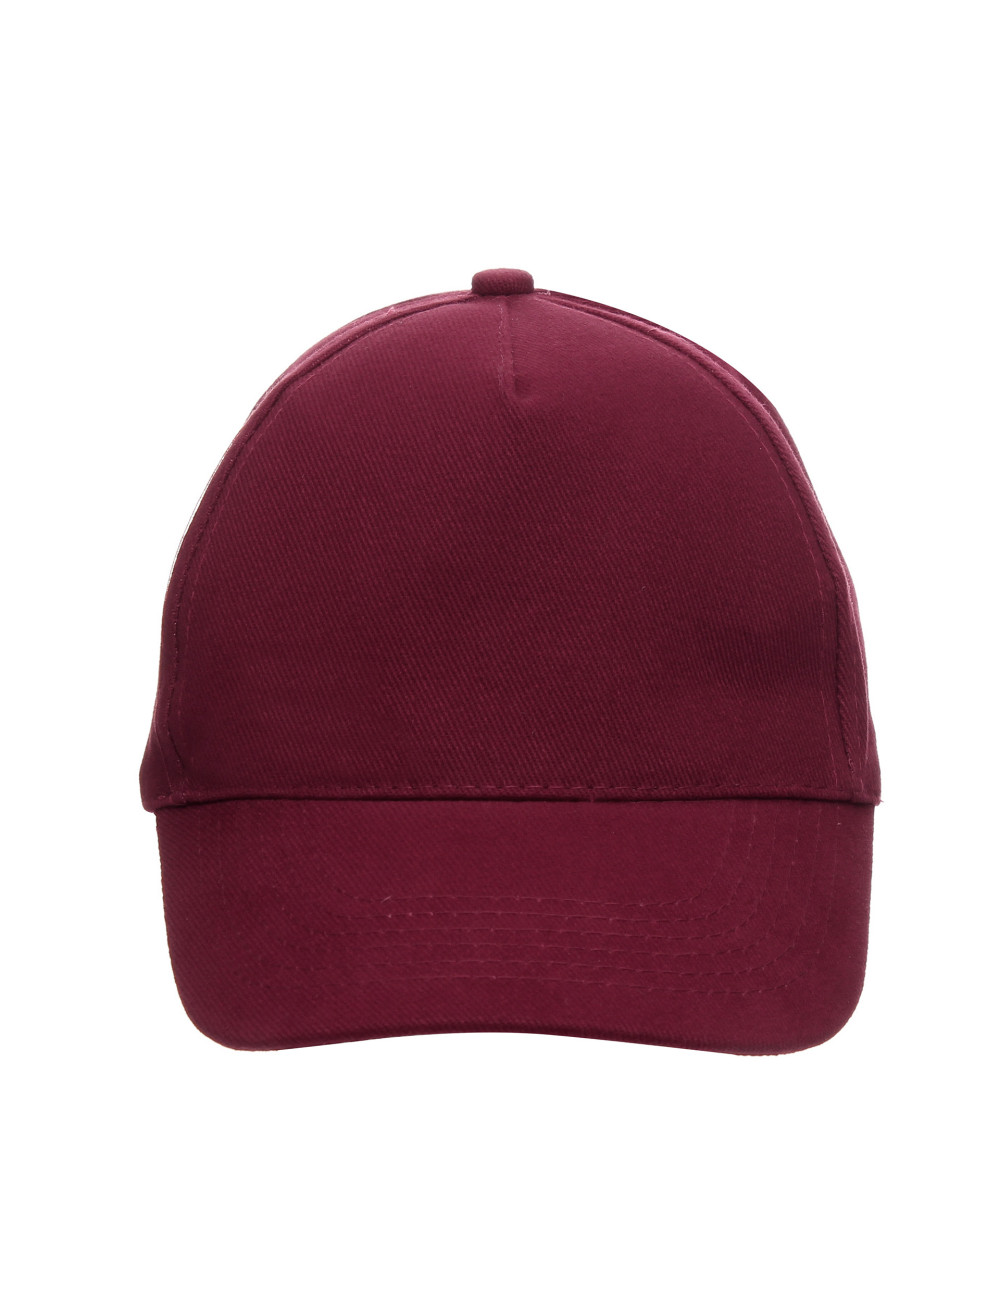 Men's comfort hat in burgundy by Promostars